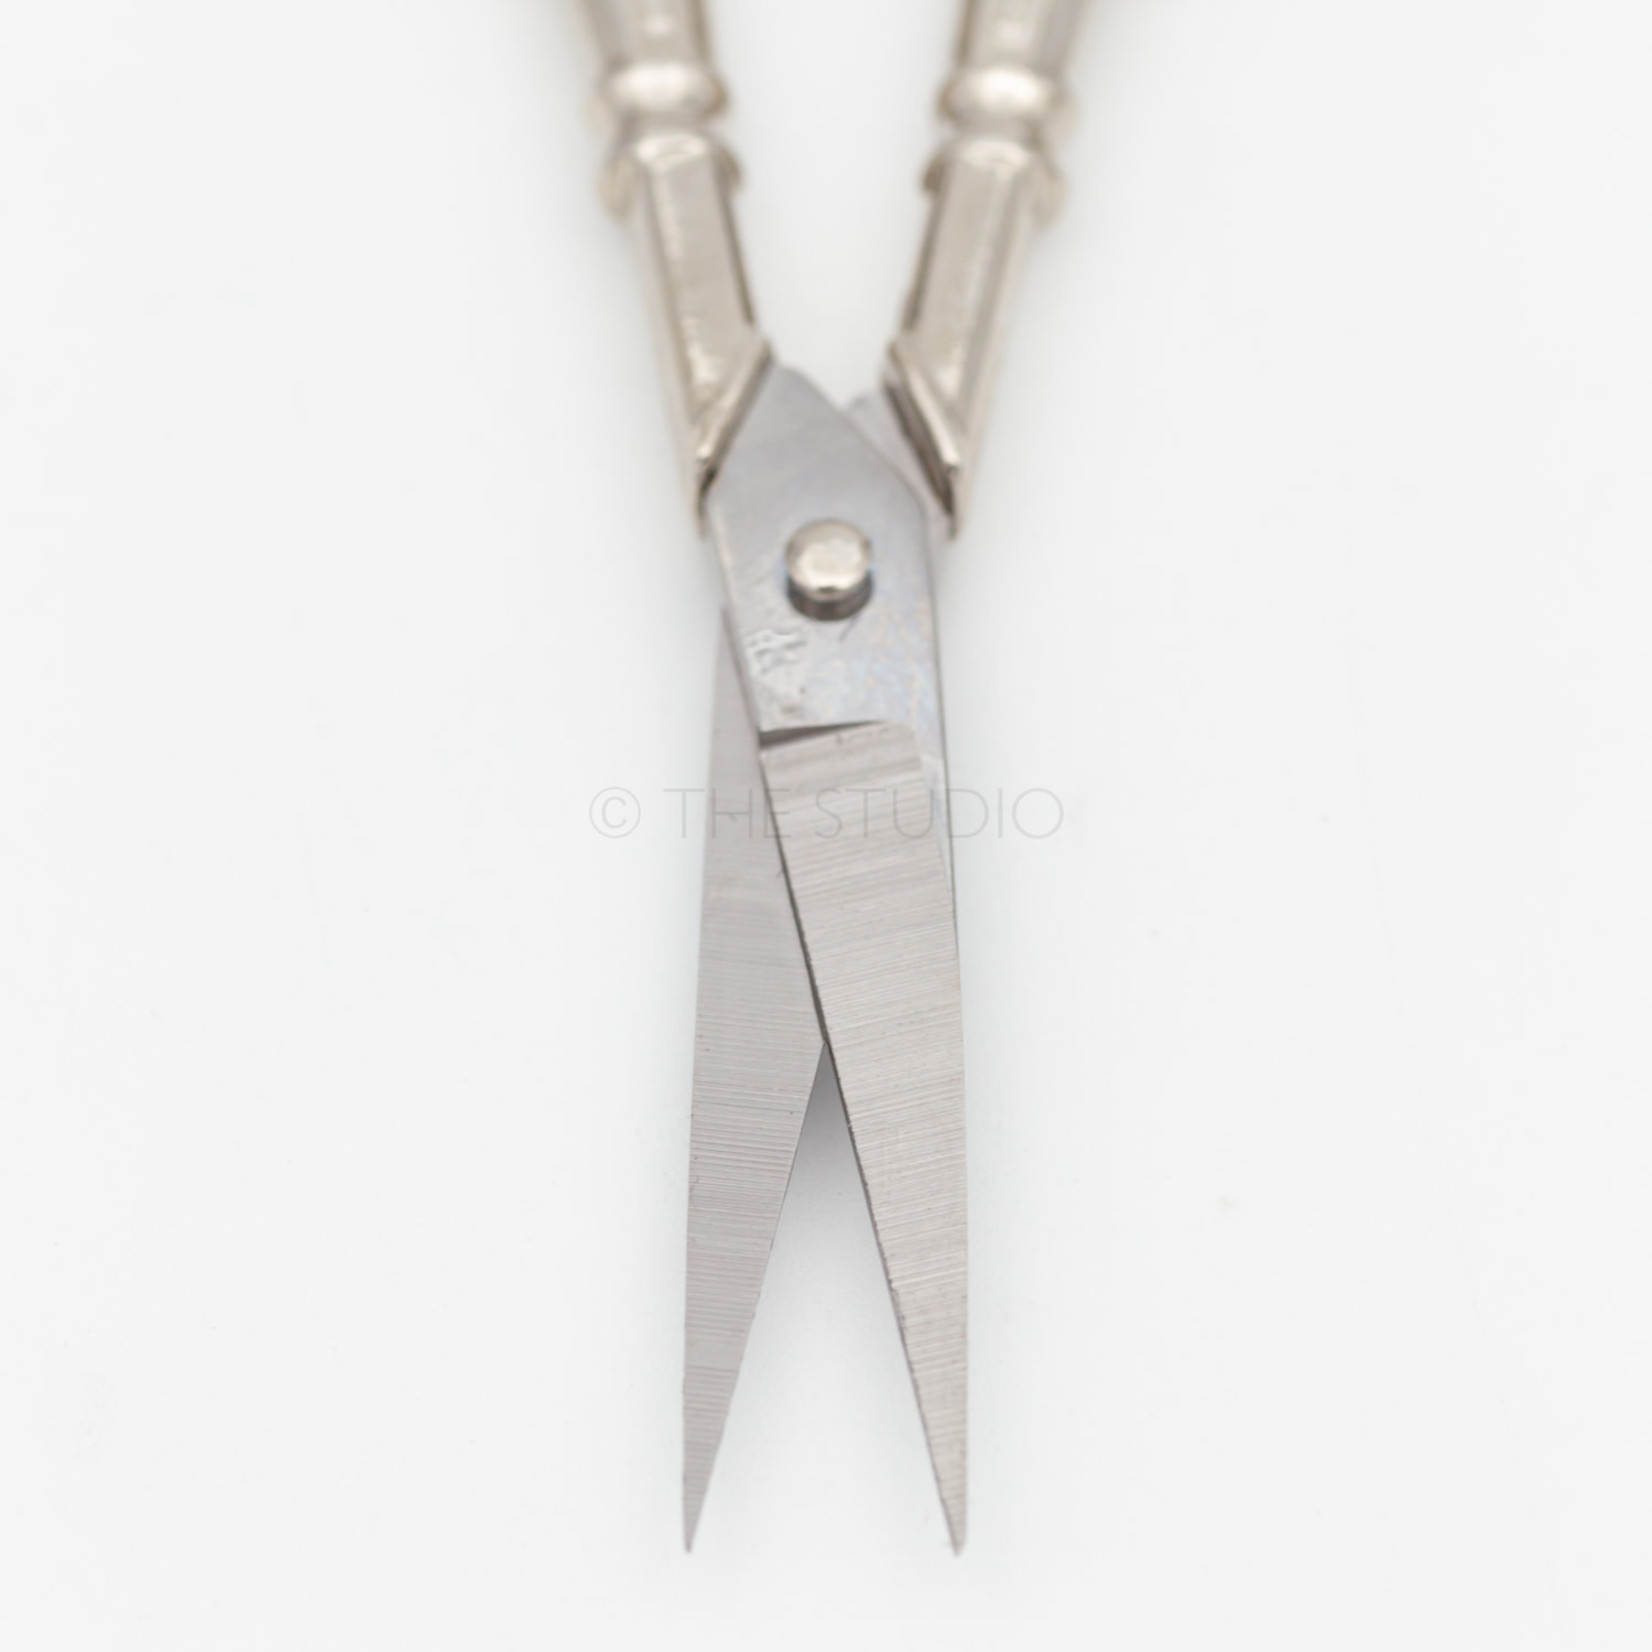 European Classical Scissors - Silver